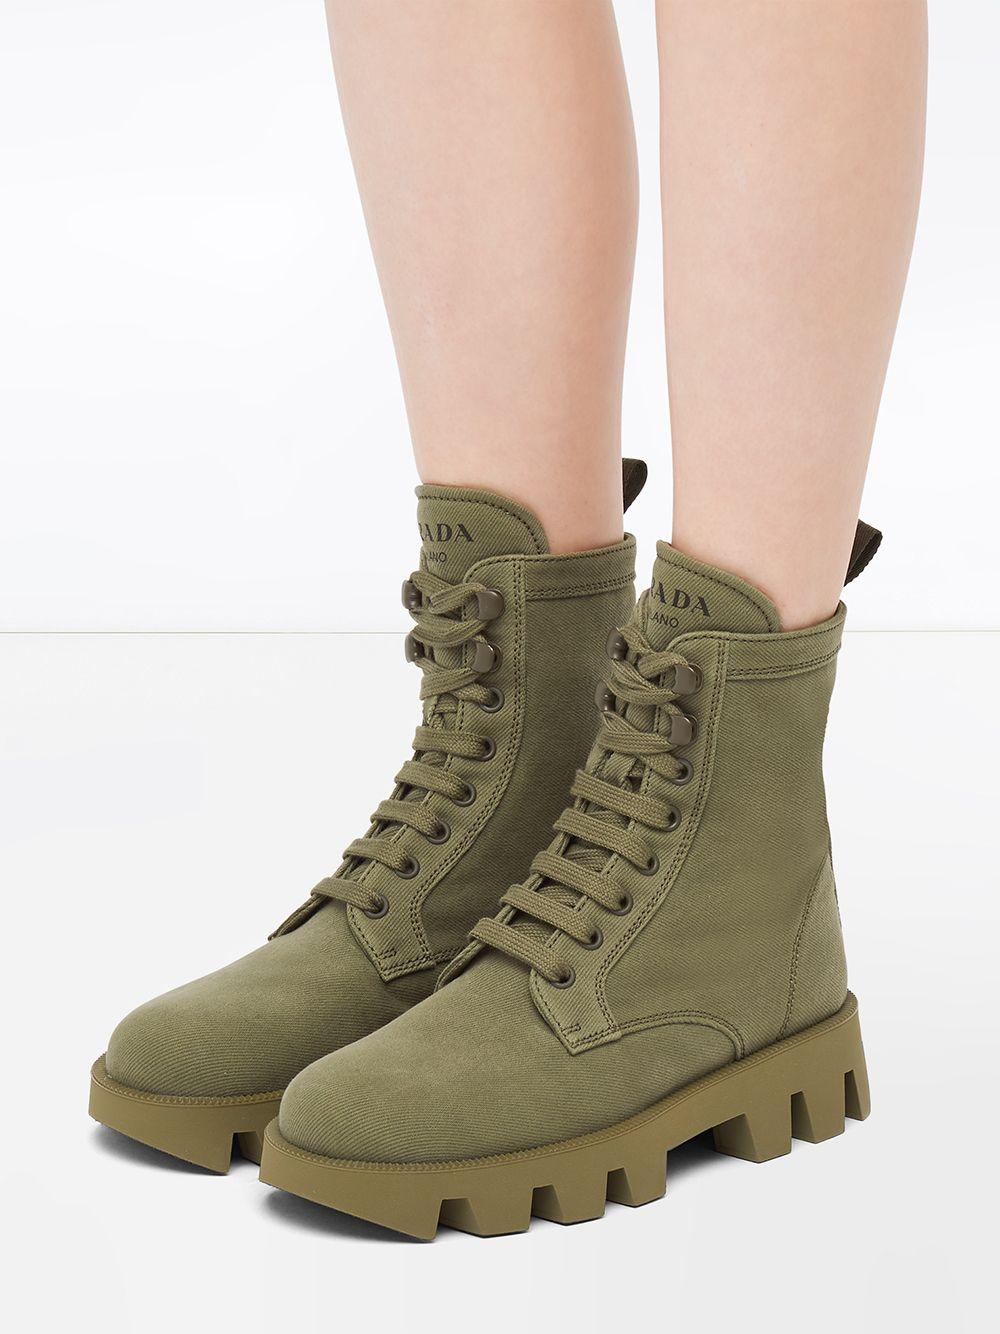 Prada Denim Ankle Boots in Military Green (Green) | Lyst